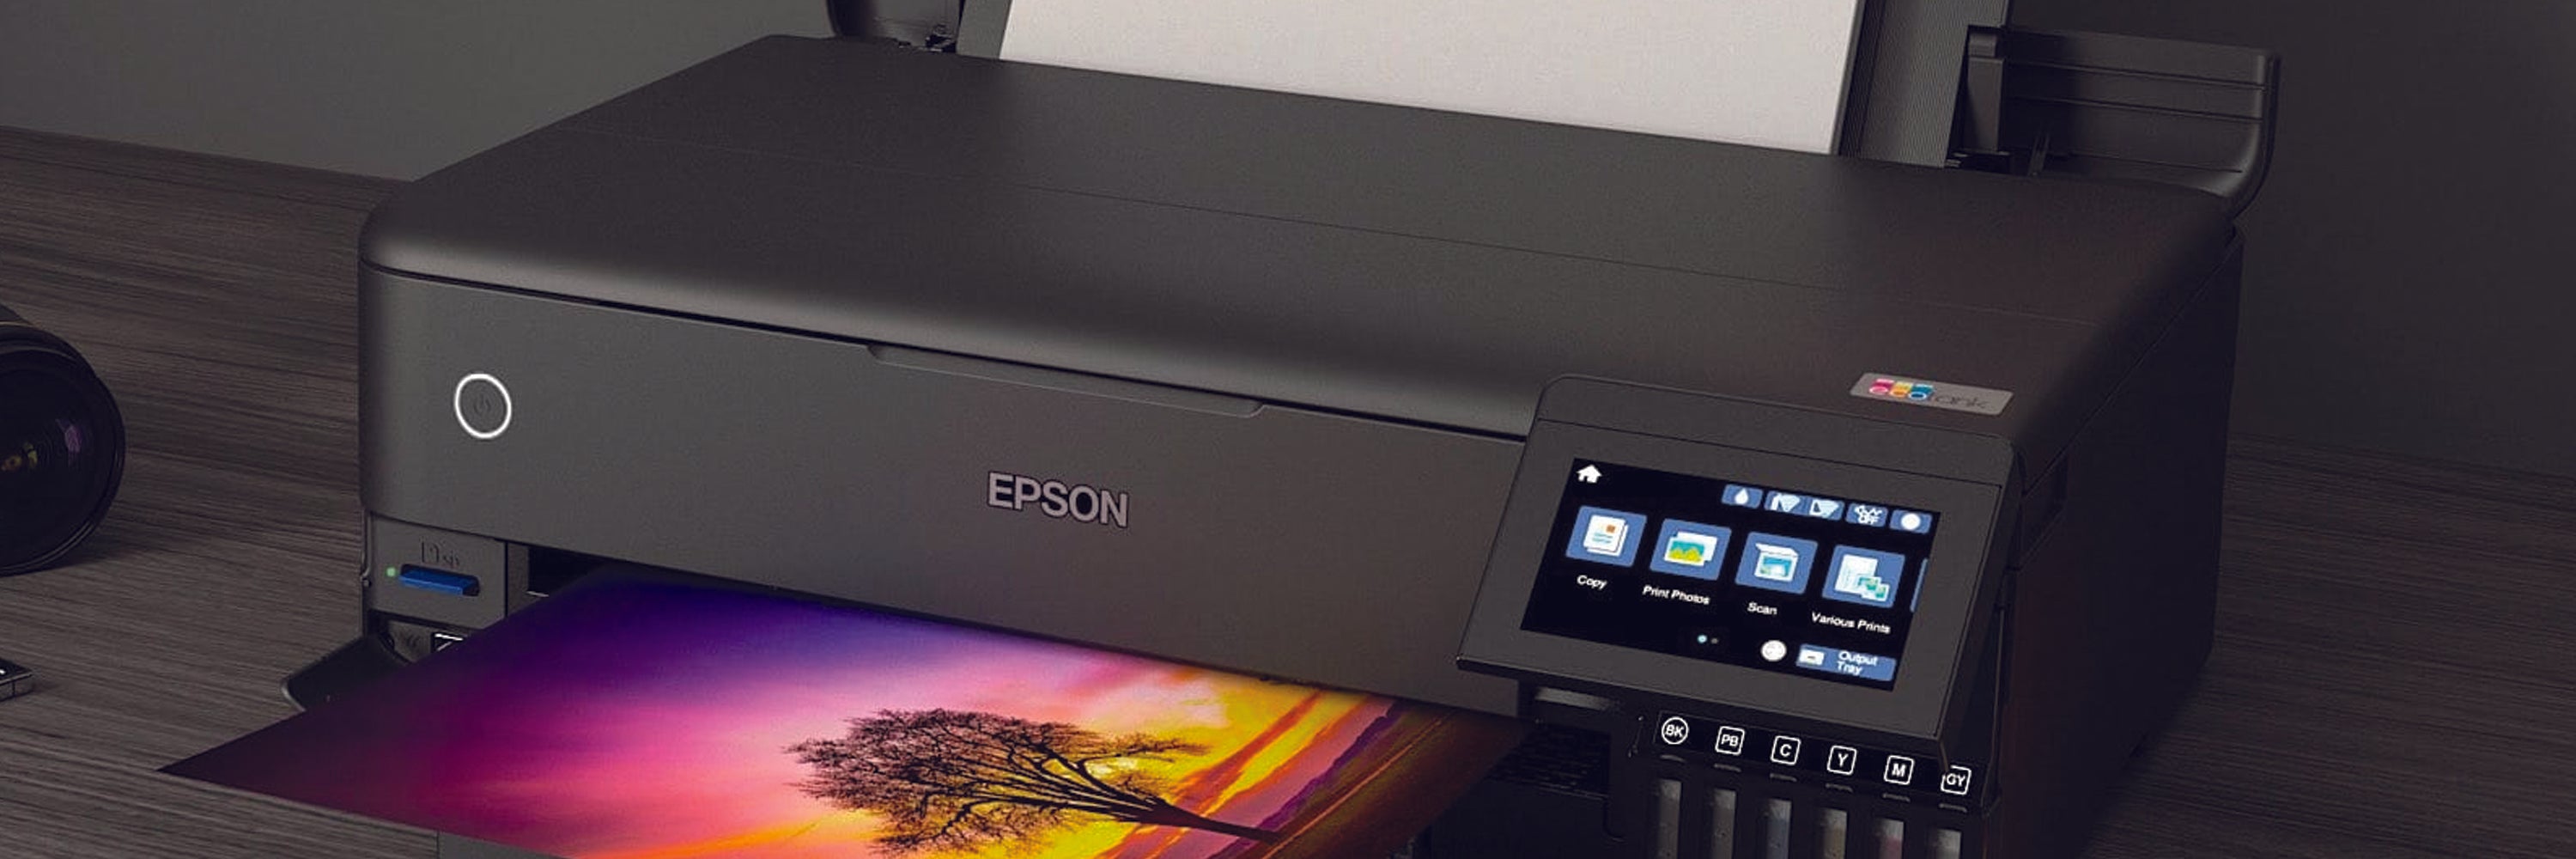 Epson ET-2820 Adjustment Program 【Update 2023】 - Epson